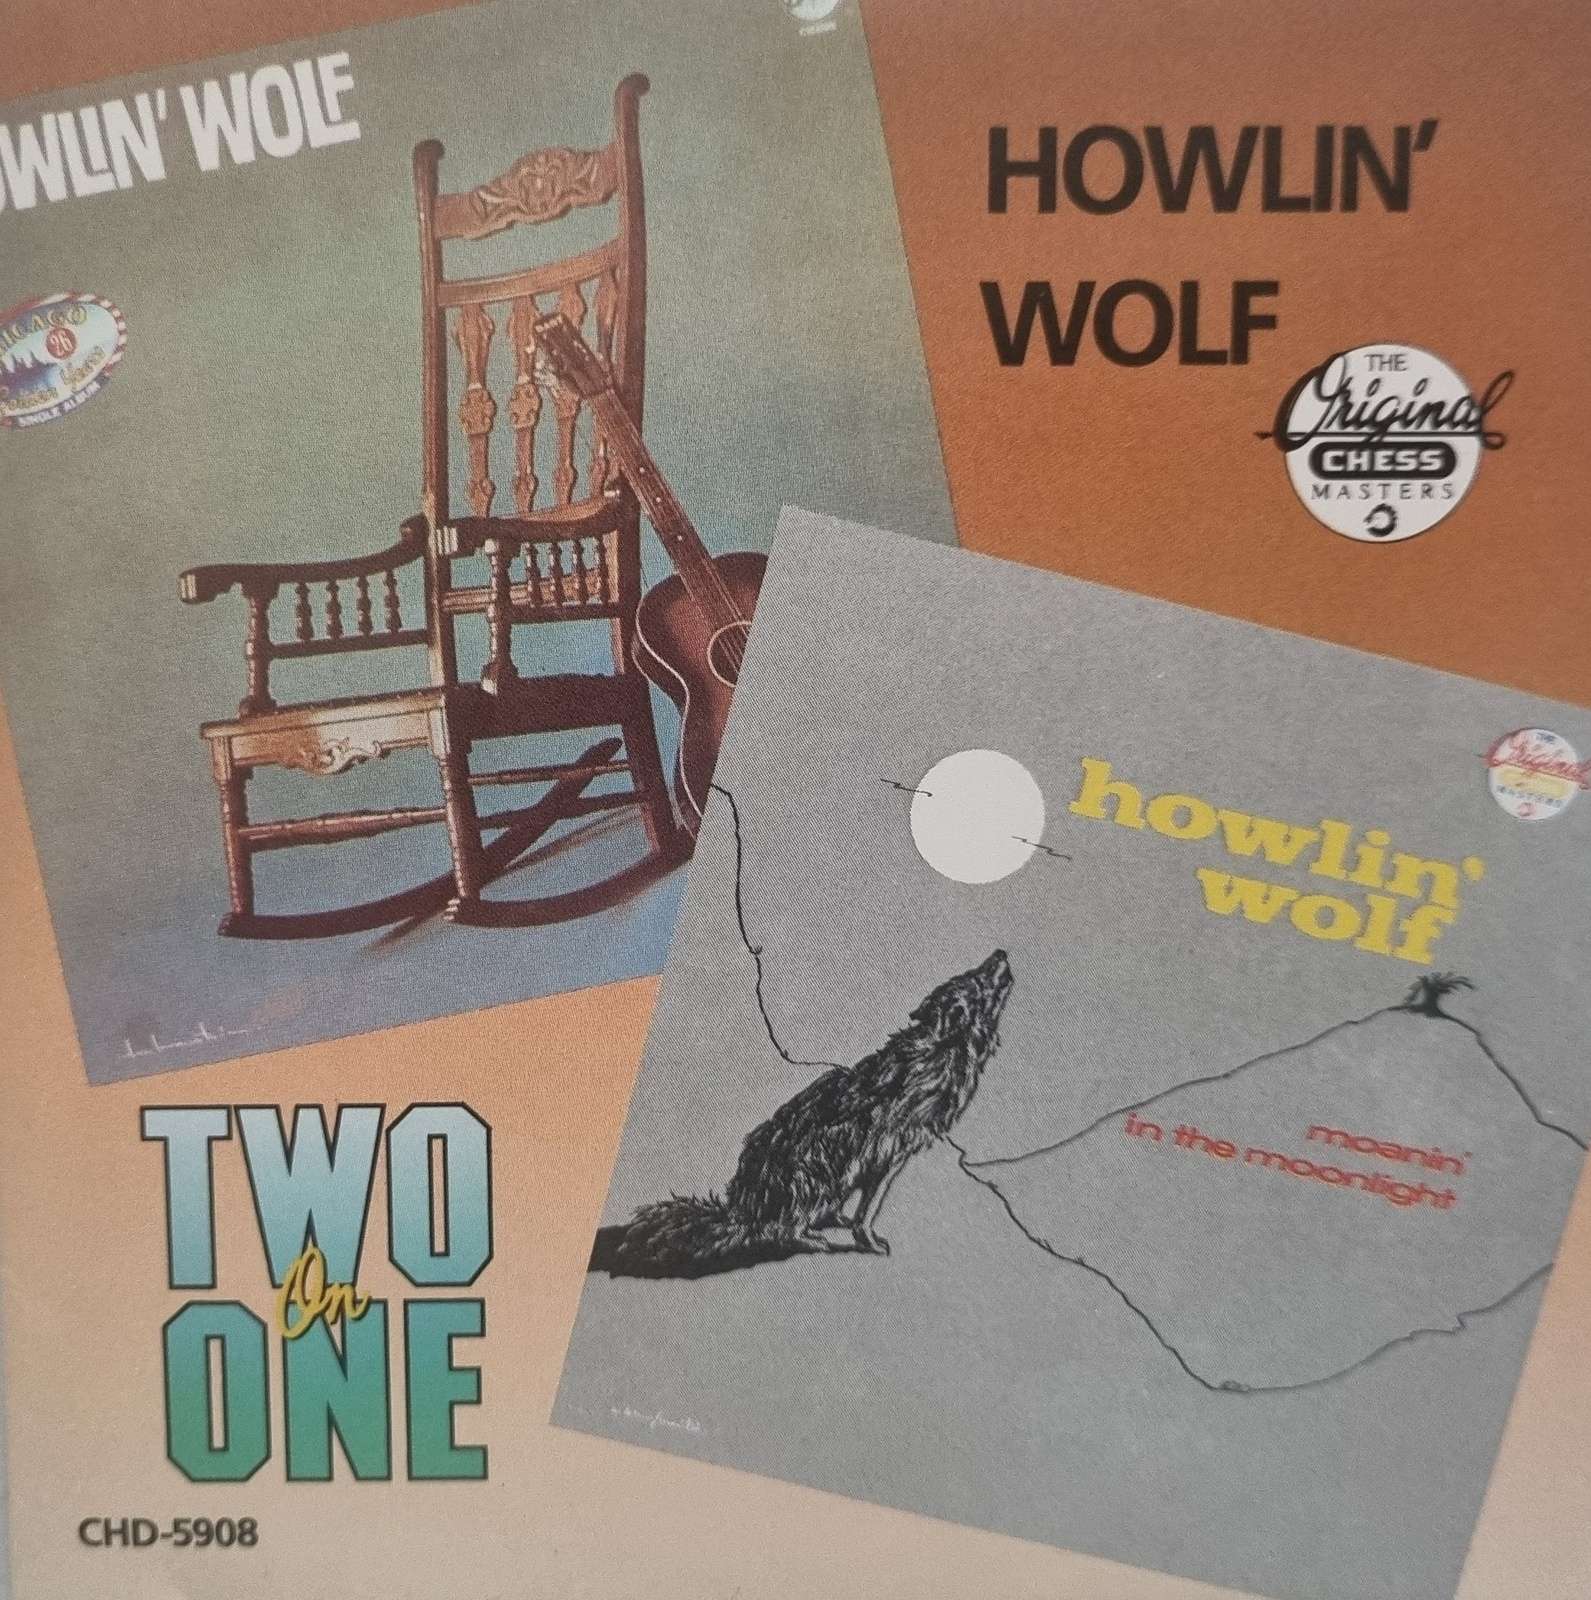 Howlin' Wolf - Moanin' in the Moonlight (CD)